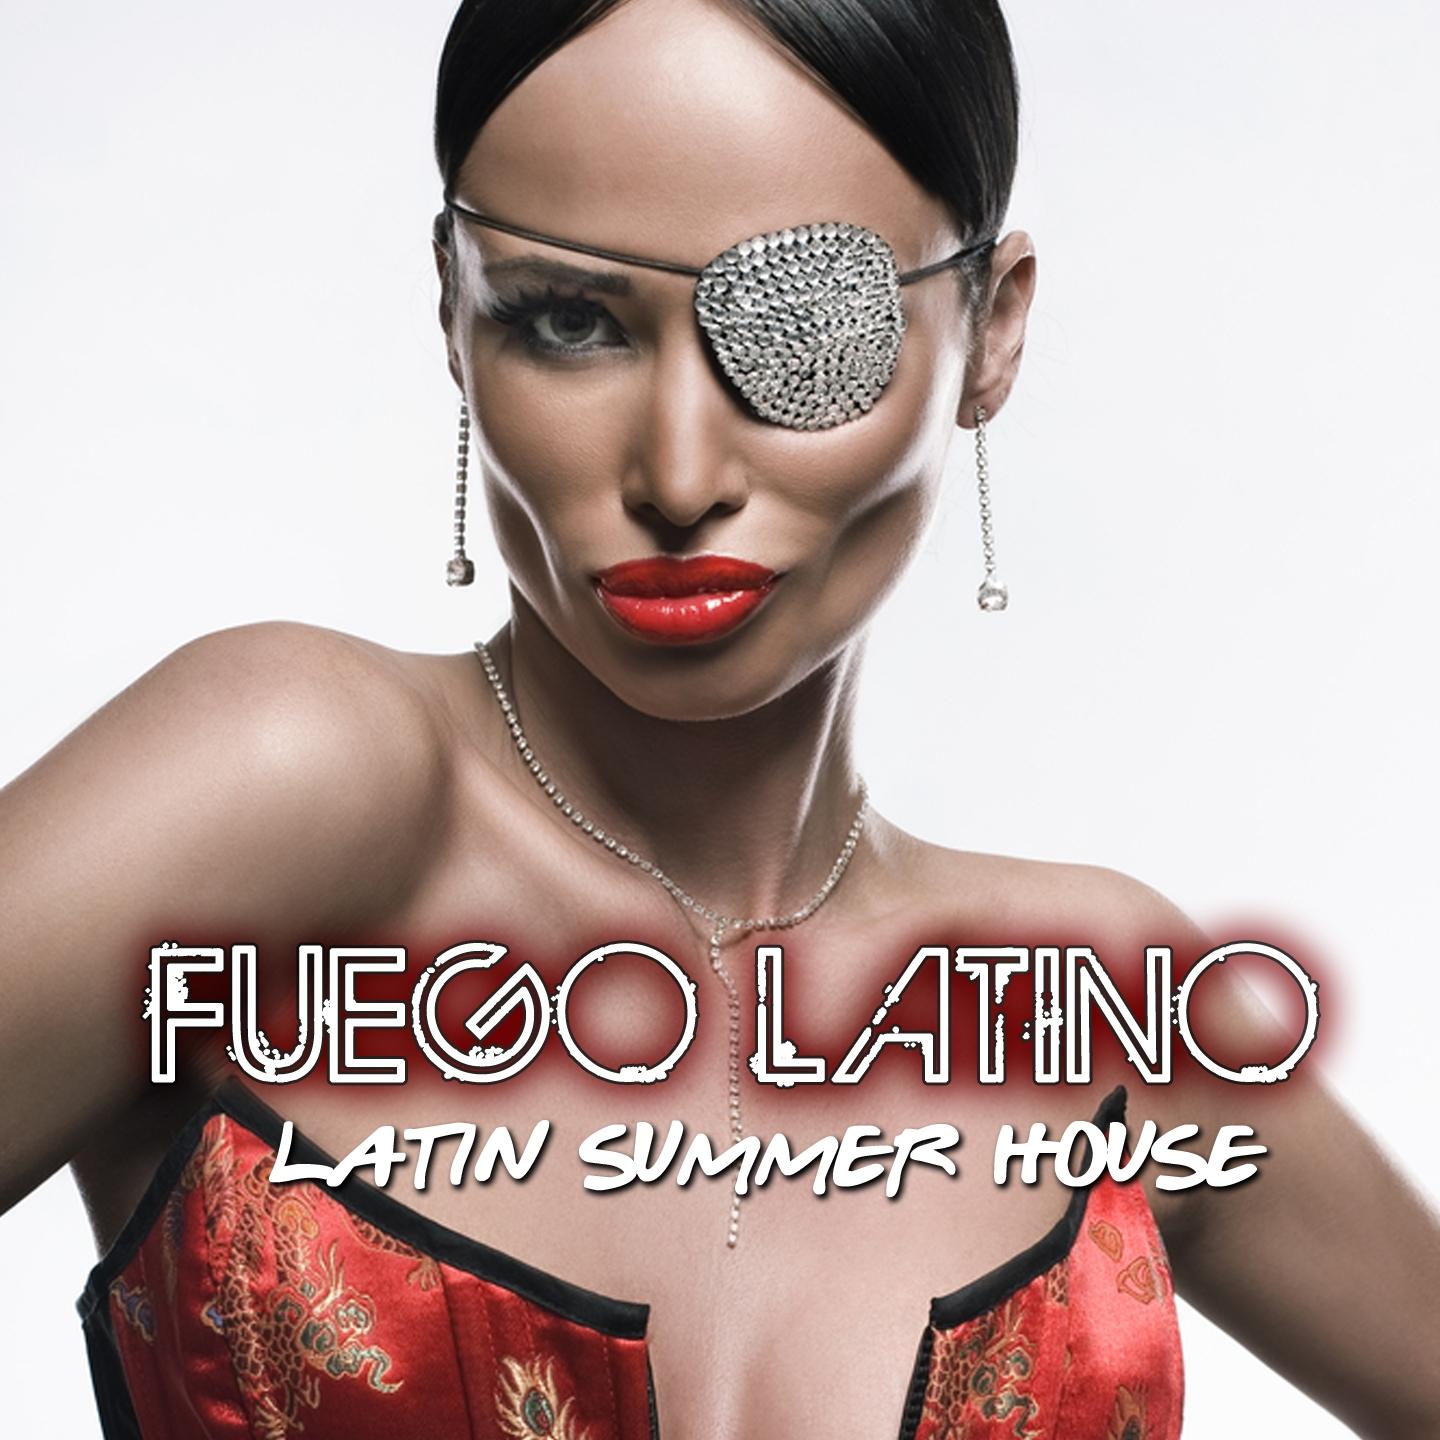 Fuego Latino (Latin Summer House)